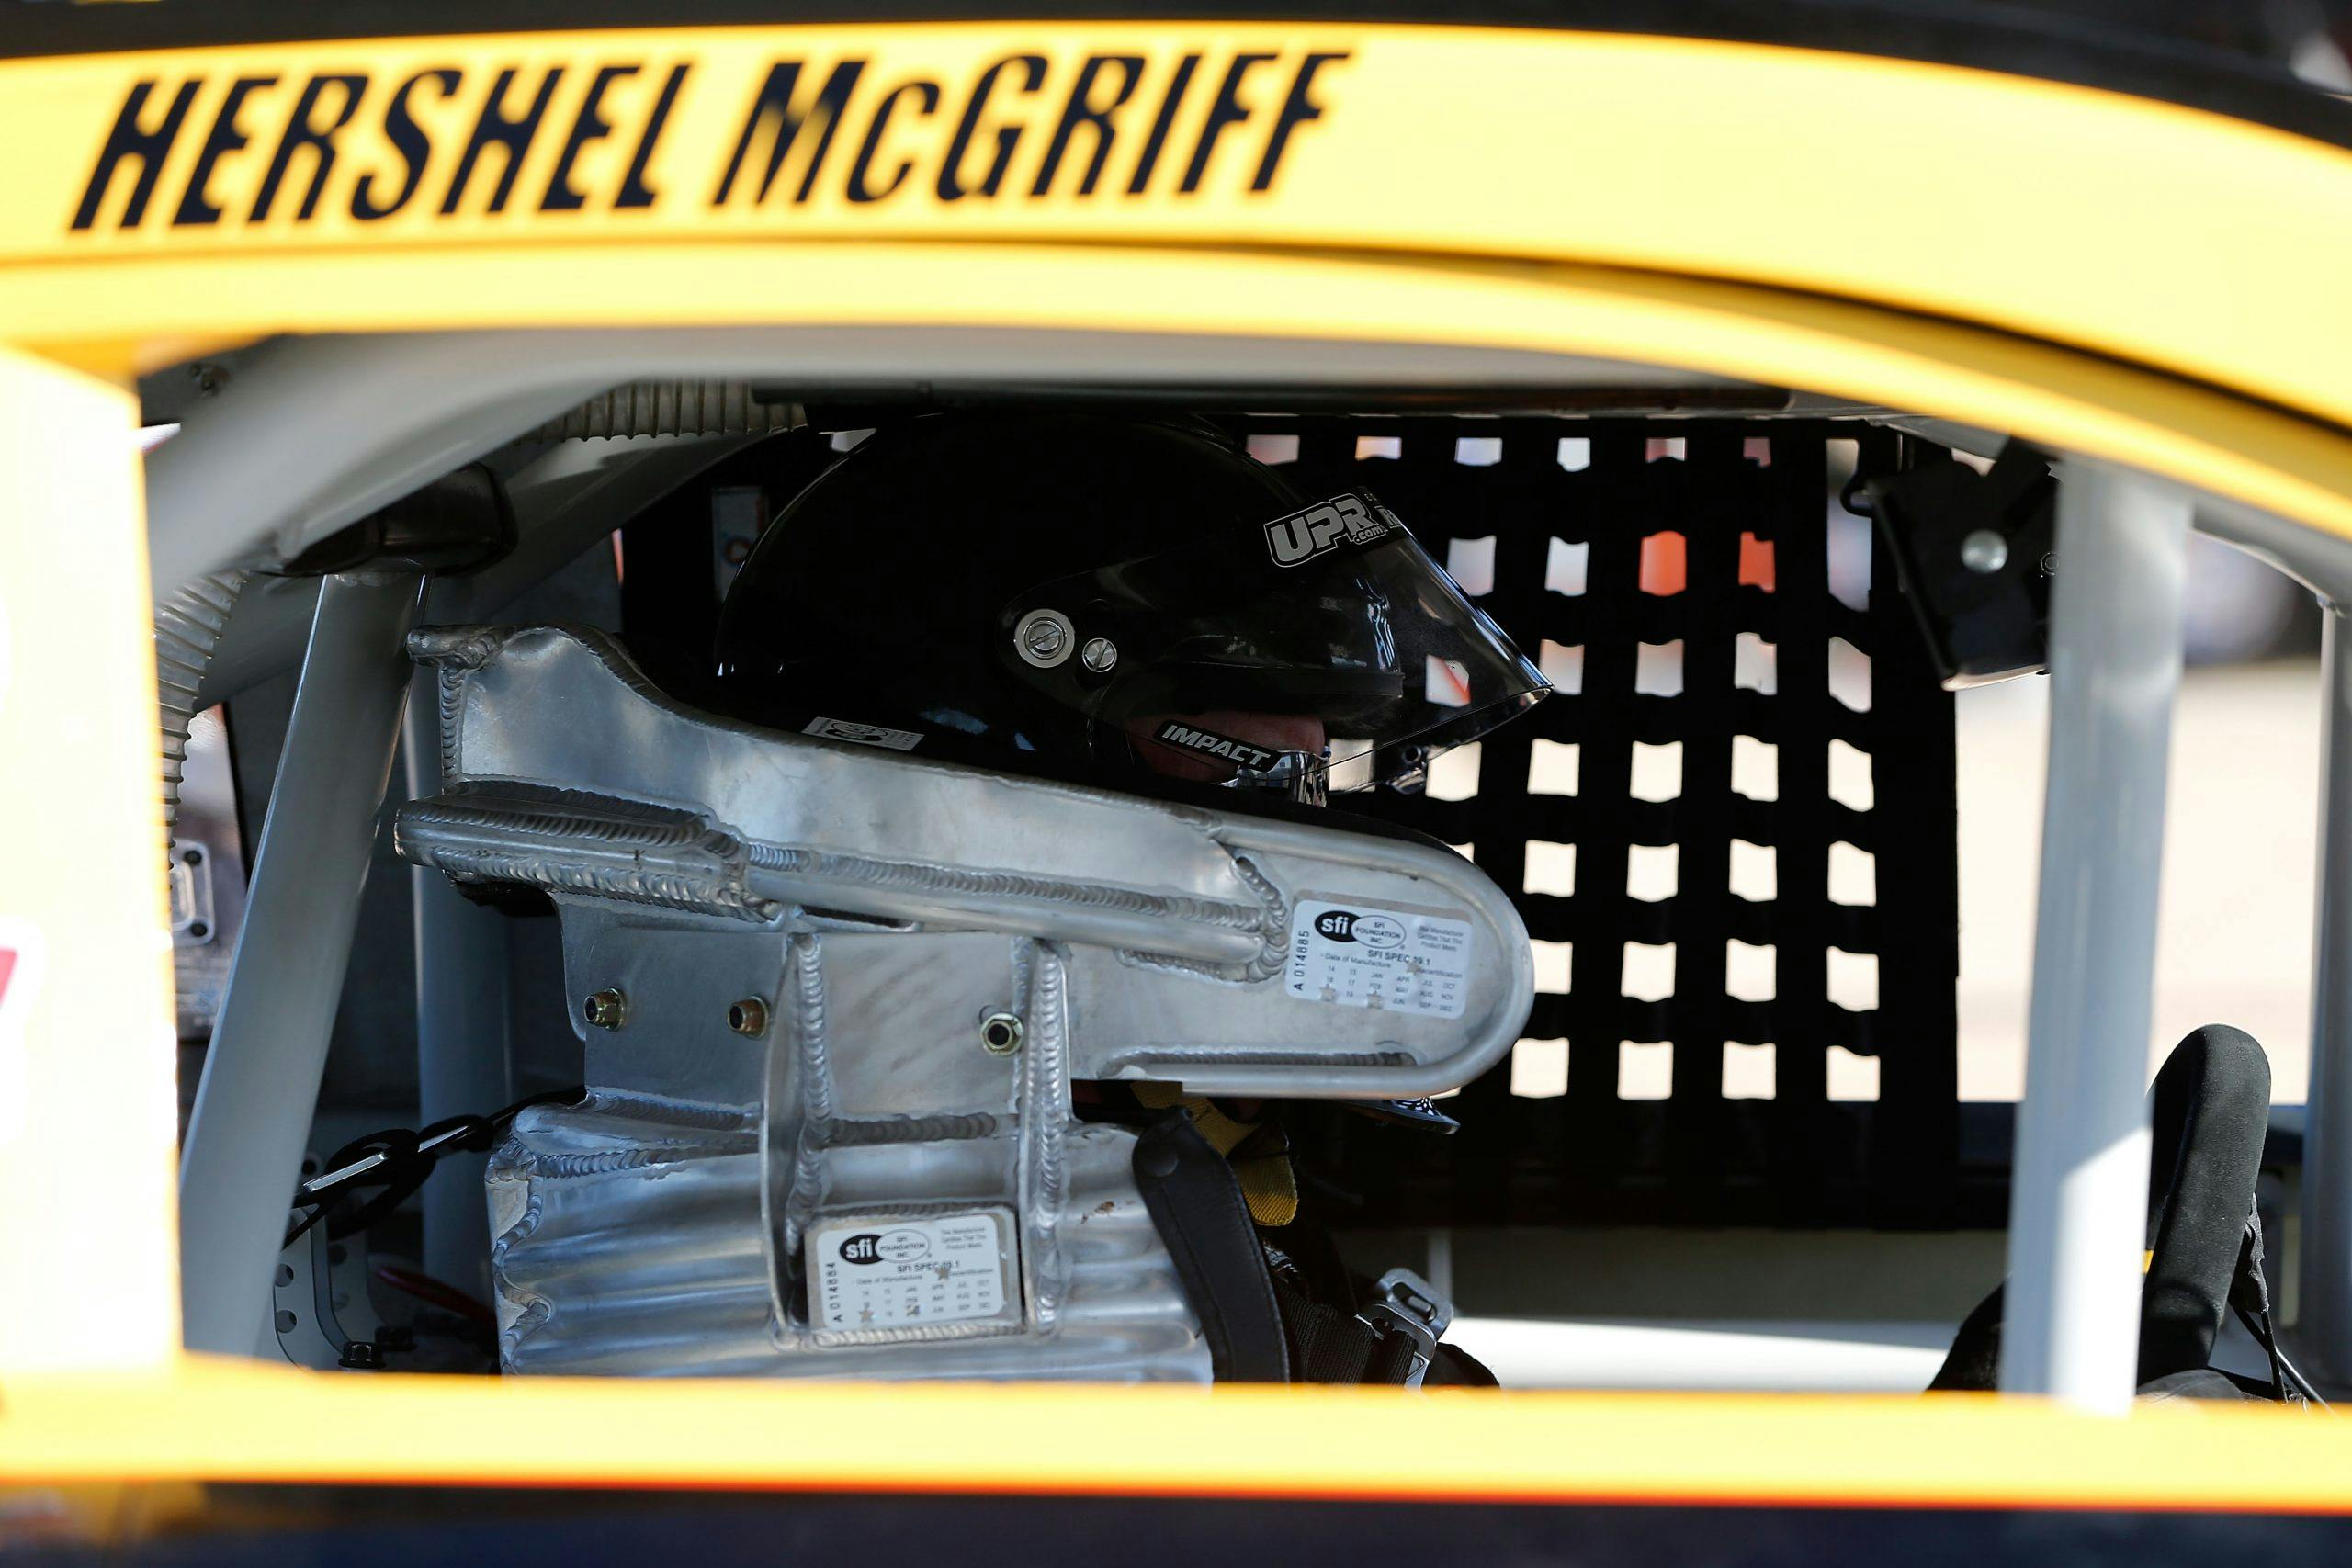 Hershel McGriff suited up in cockpit